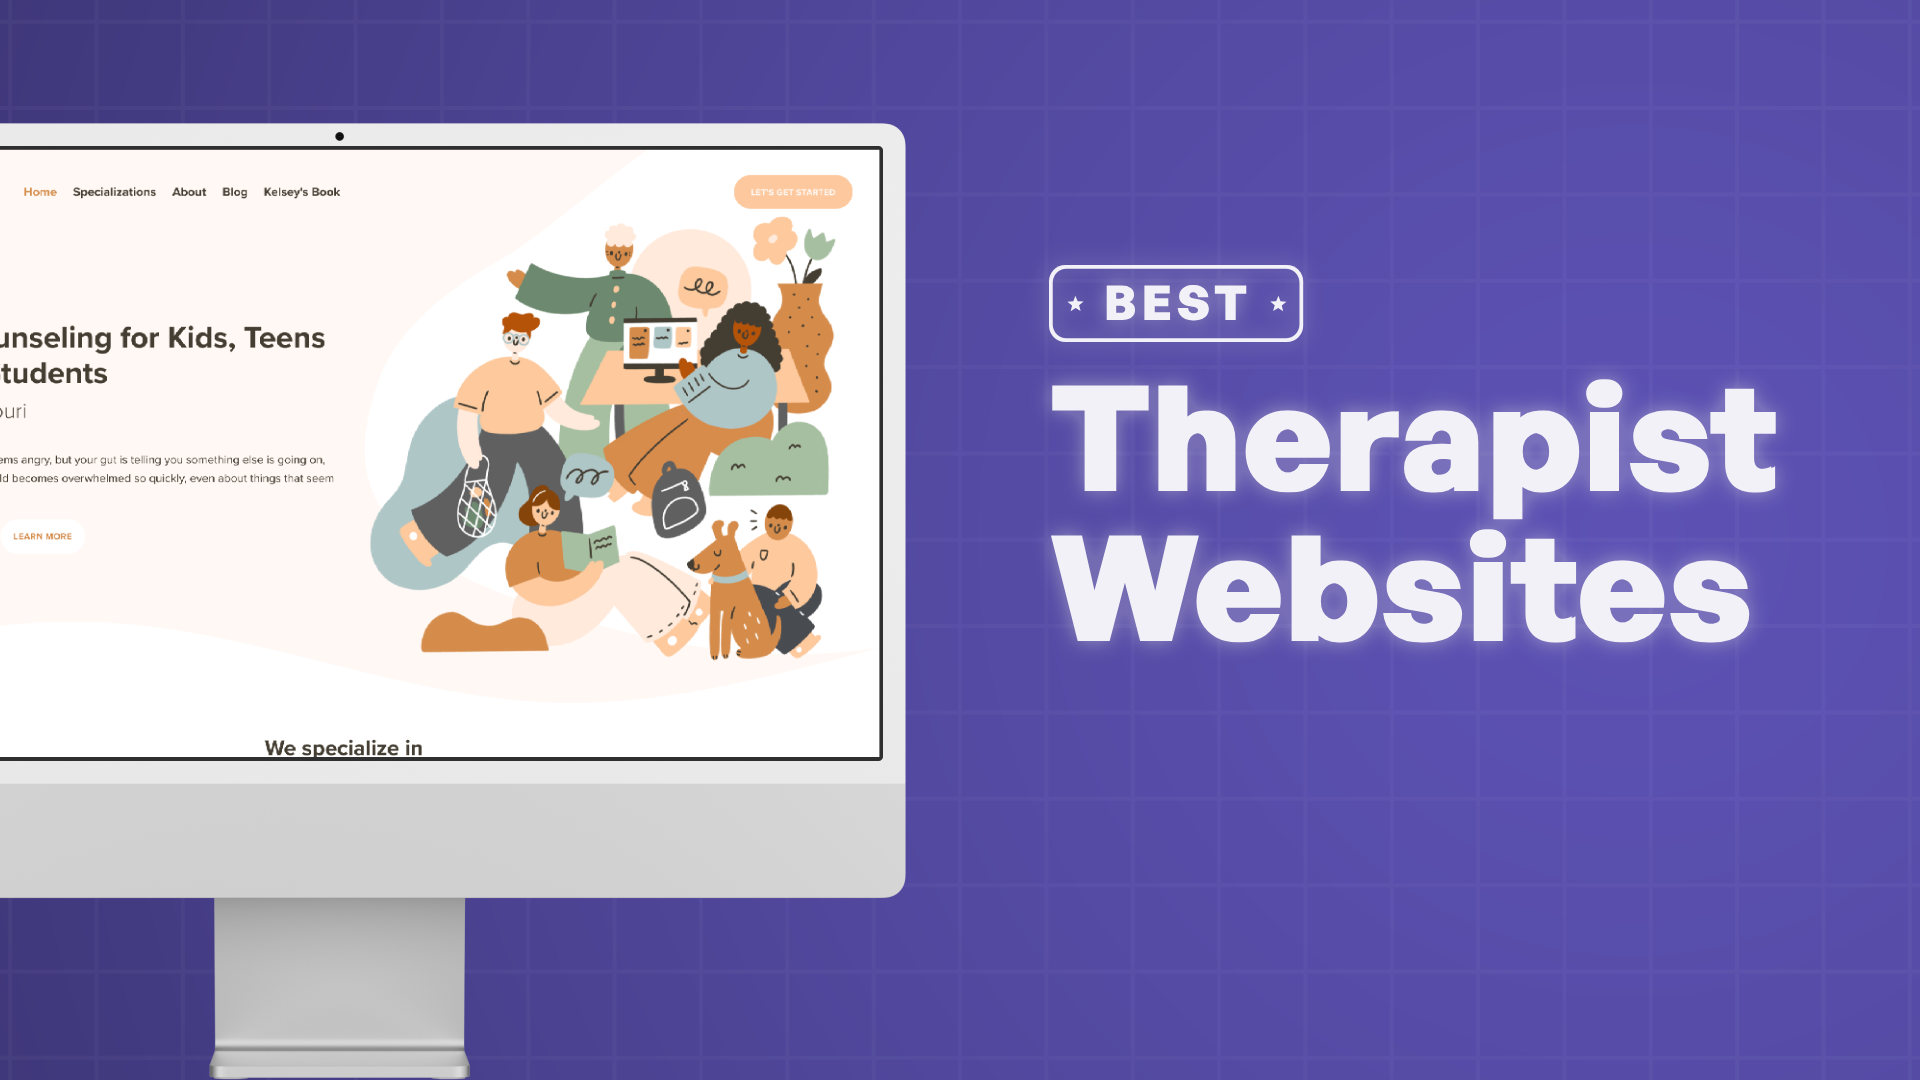 "Best therapist websites" with therapist website examples